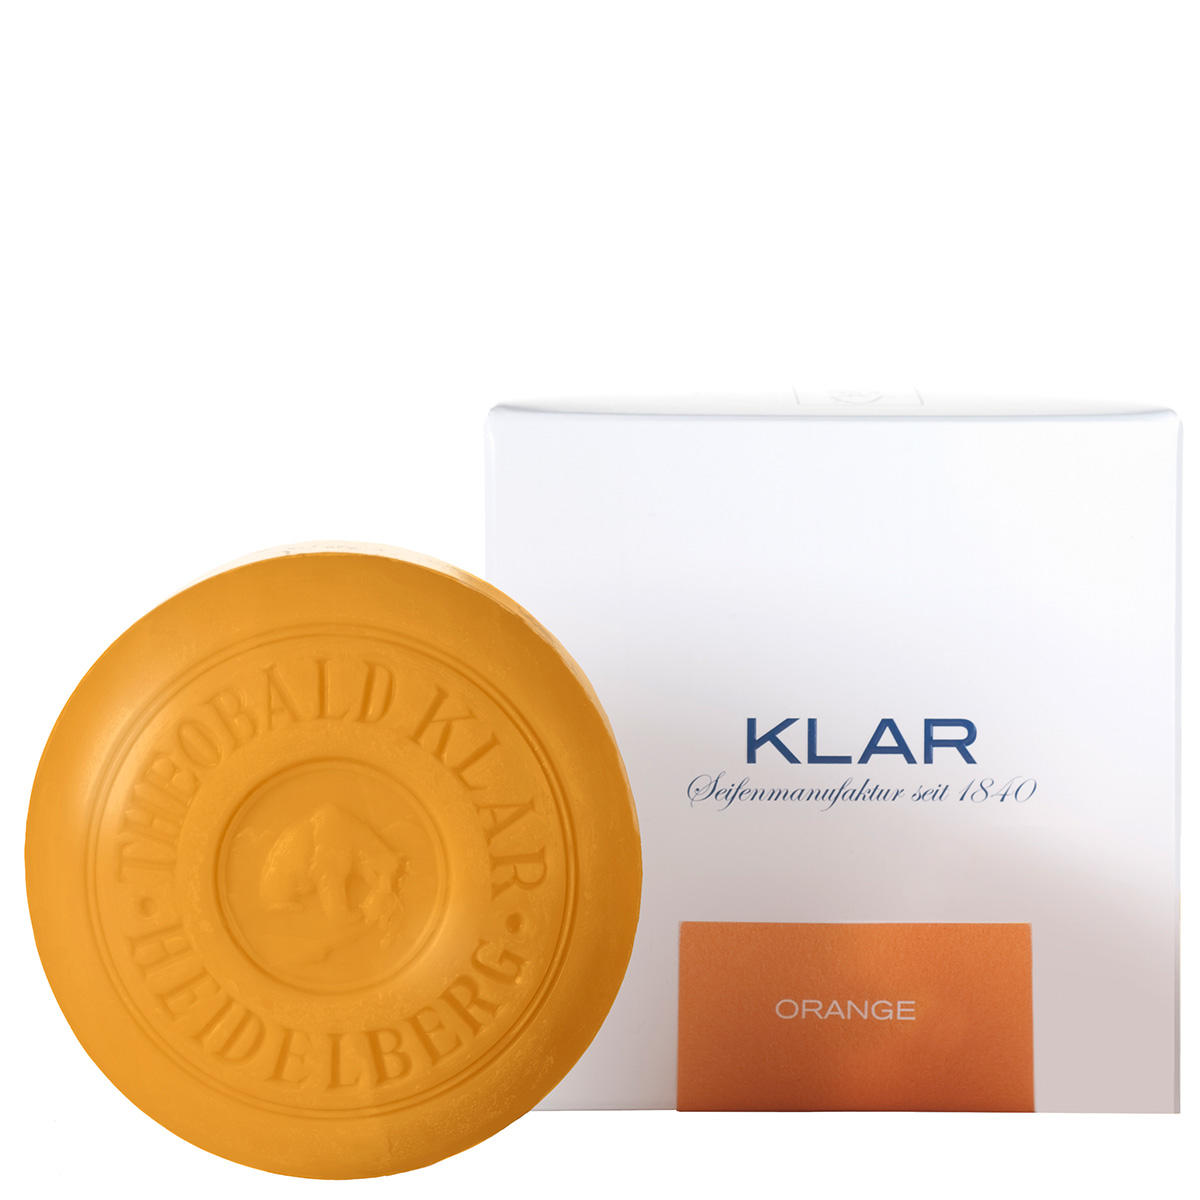 KLAR Jabón de naranja 150 g - 1